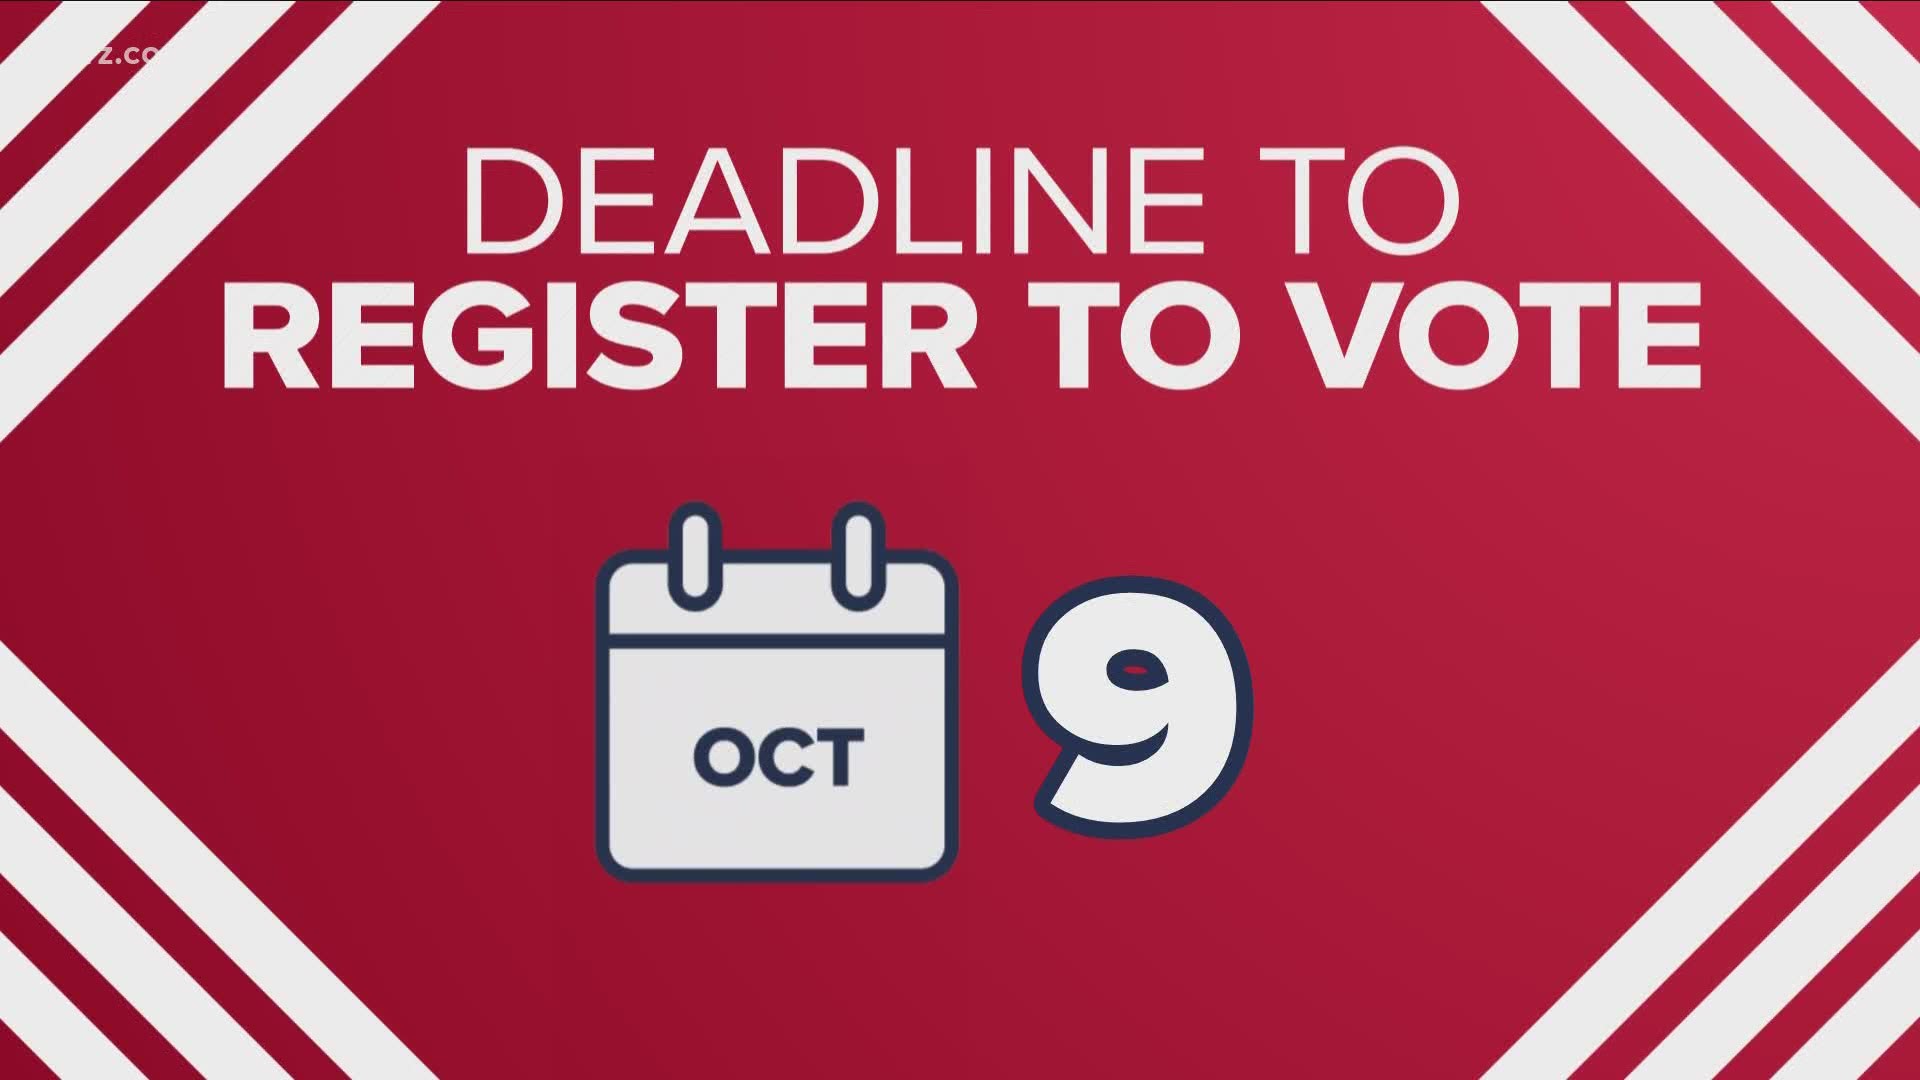 Deadline to register to vote is October 9, 2020